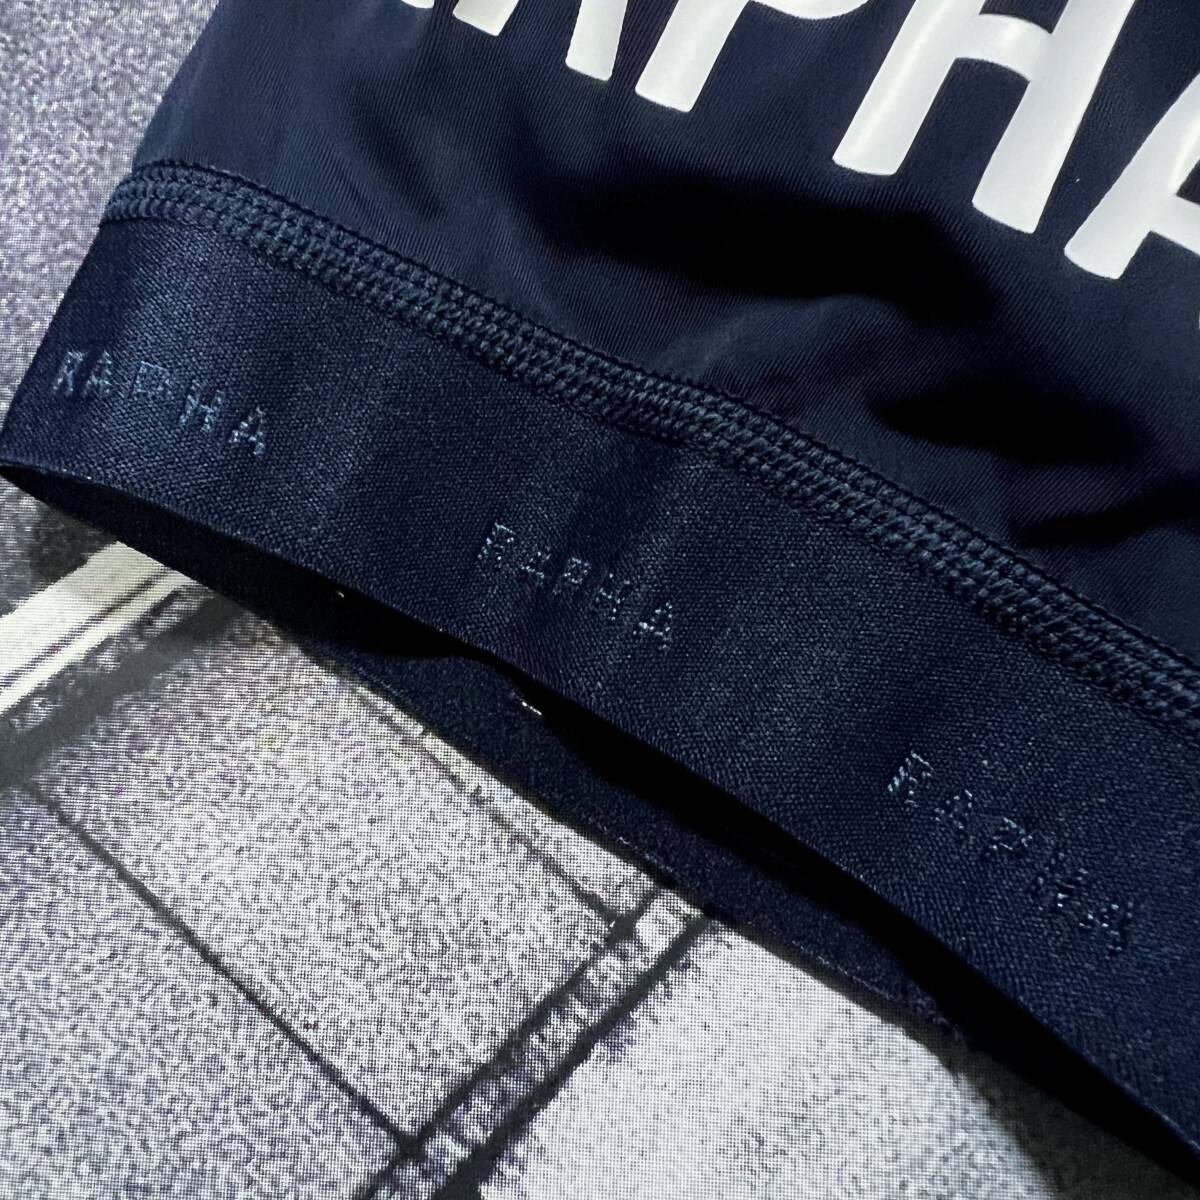 Rapha Men’s Pro Team Training Bib Shorts Sサイズ ダークネイビー/ホワイト ラファ メンズ プロチーム トレーニング ビブショーツ_画像7